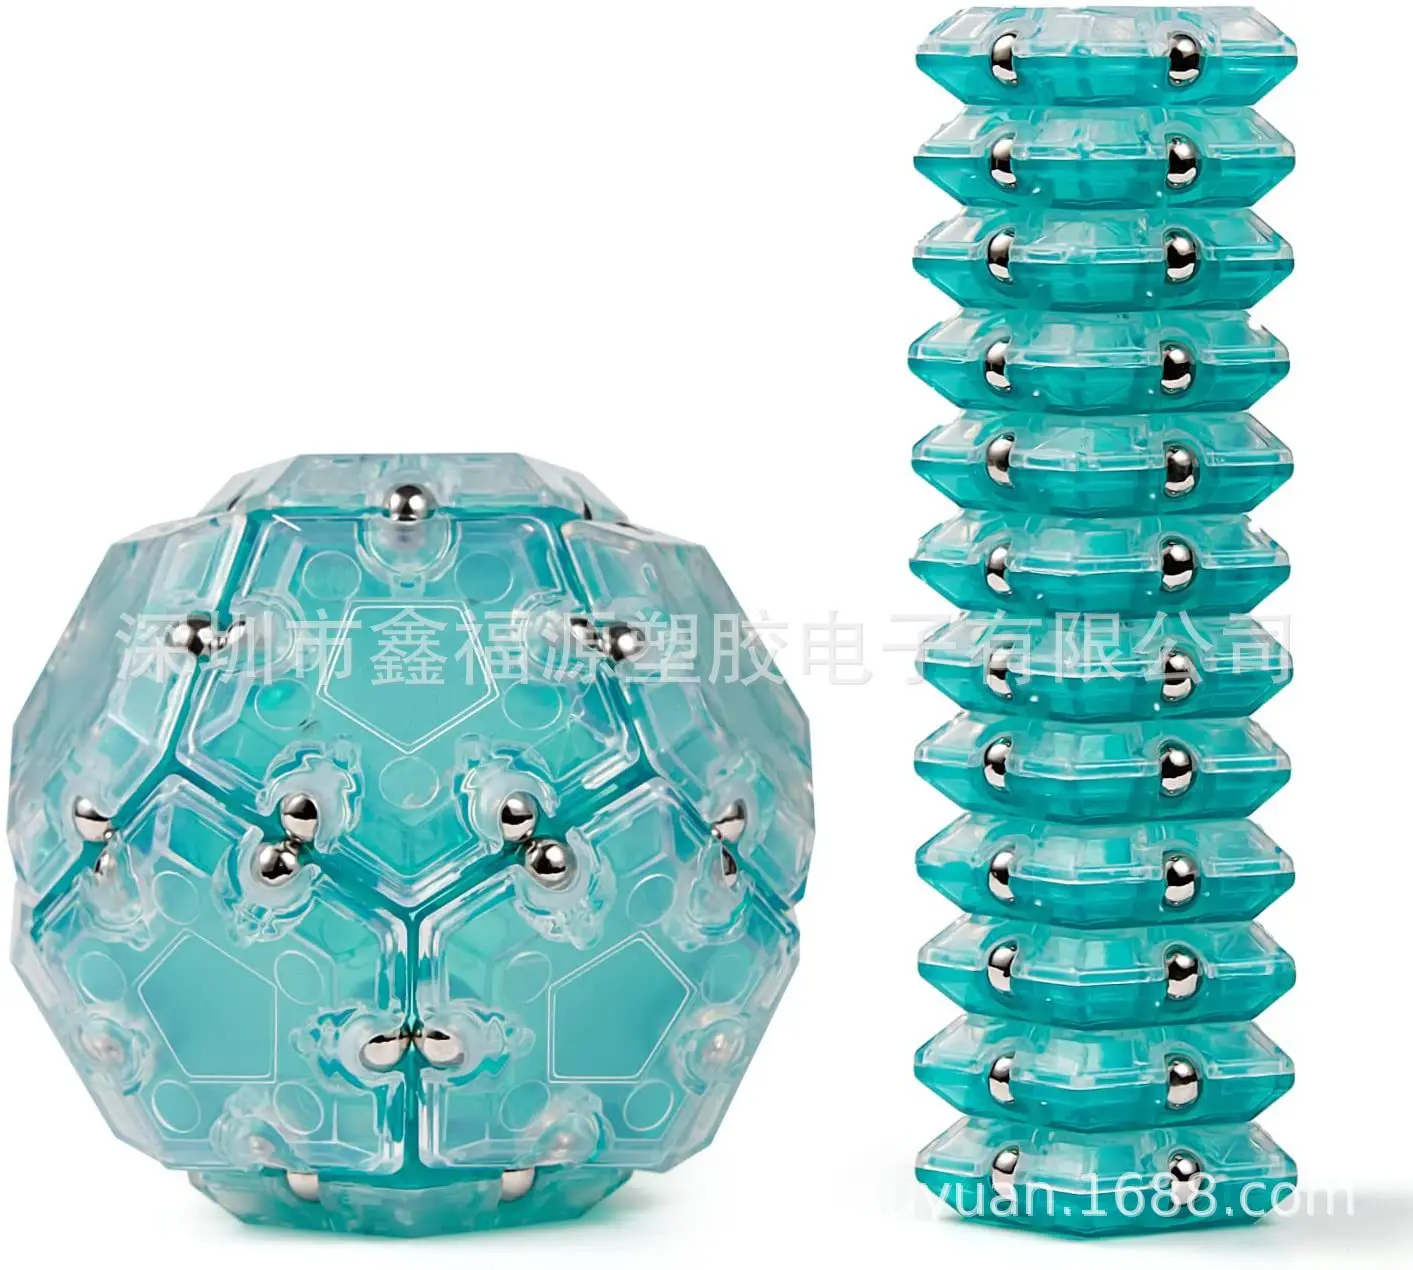 Soli Recreational Creative Magnetic Geode Fidget Sphere Toy Magnetic Pentagons Building Block Set Stress Relief Desk Magnet Toy